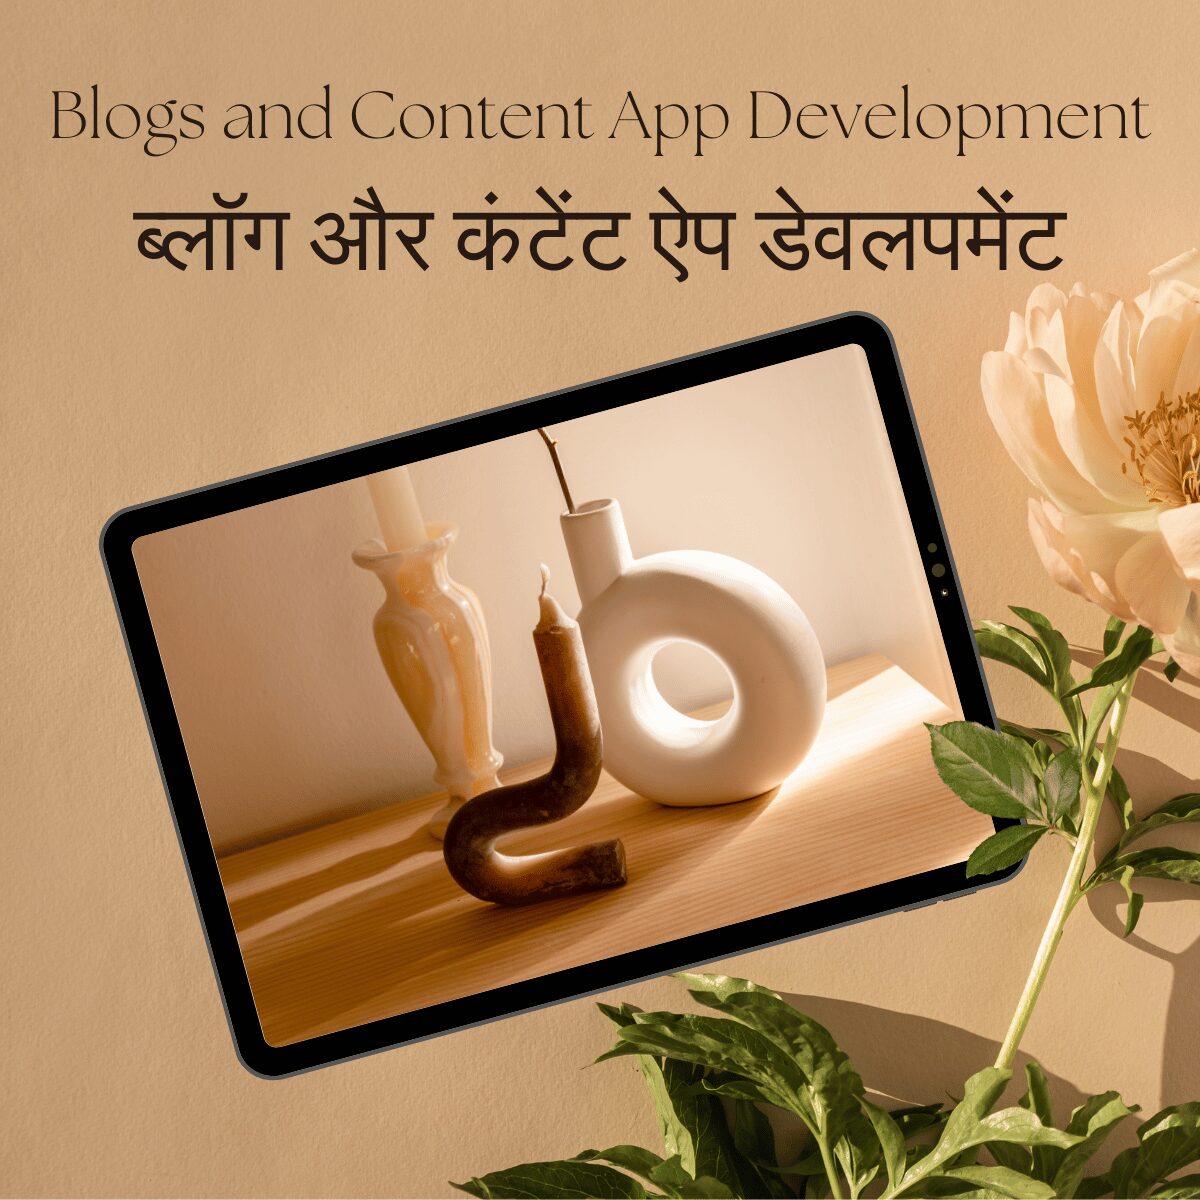 Blogs and Content App Development ब्लॉग और कंटेंट ऐप डेवलपमेंट